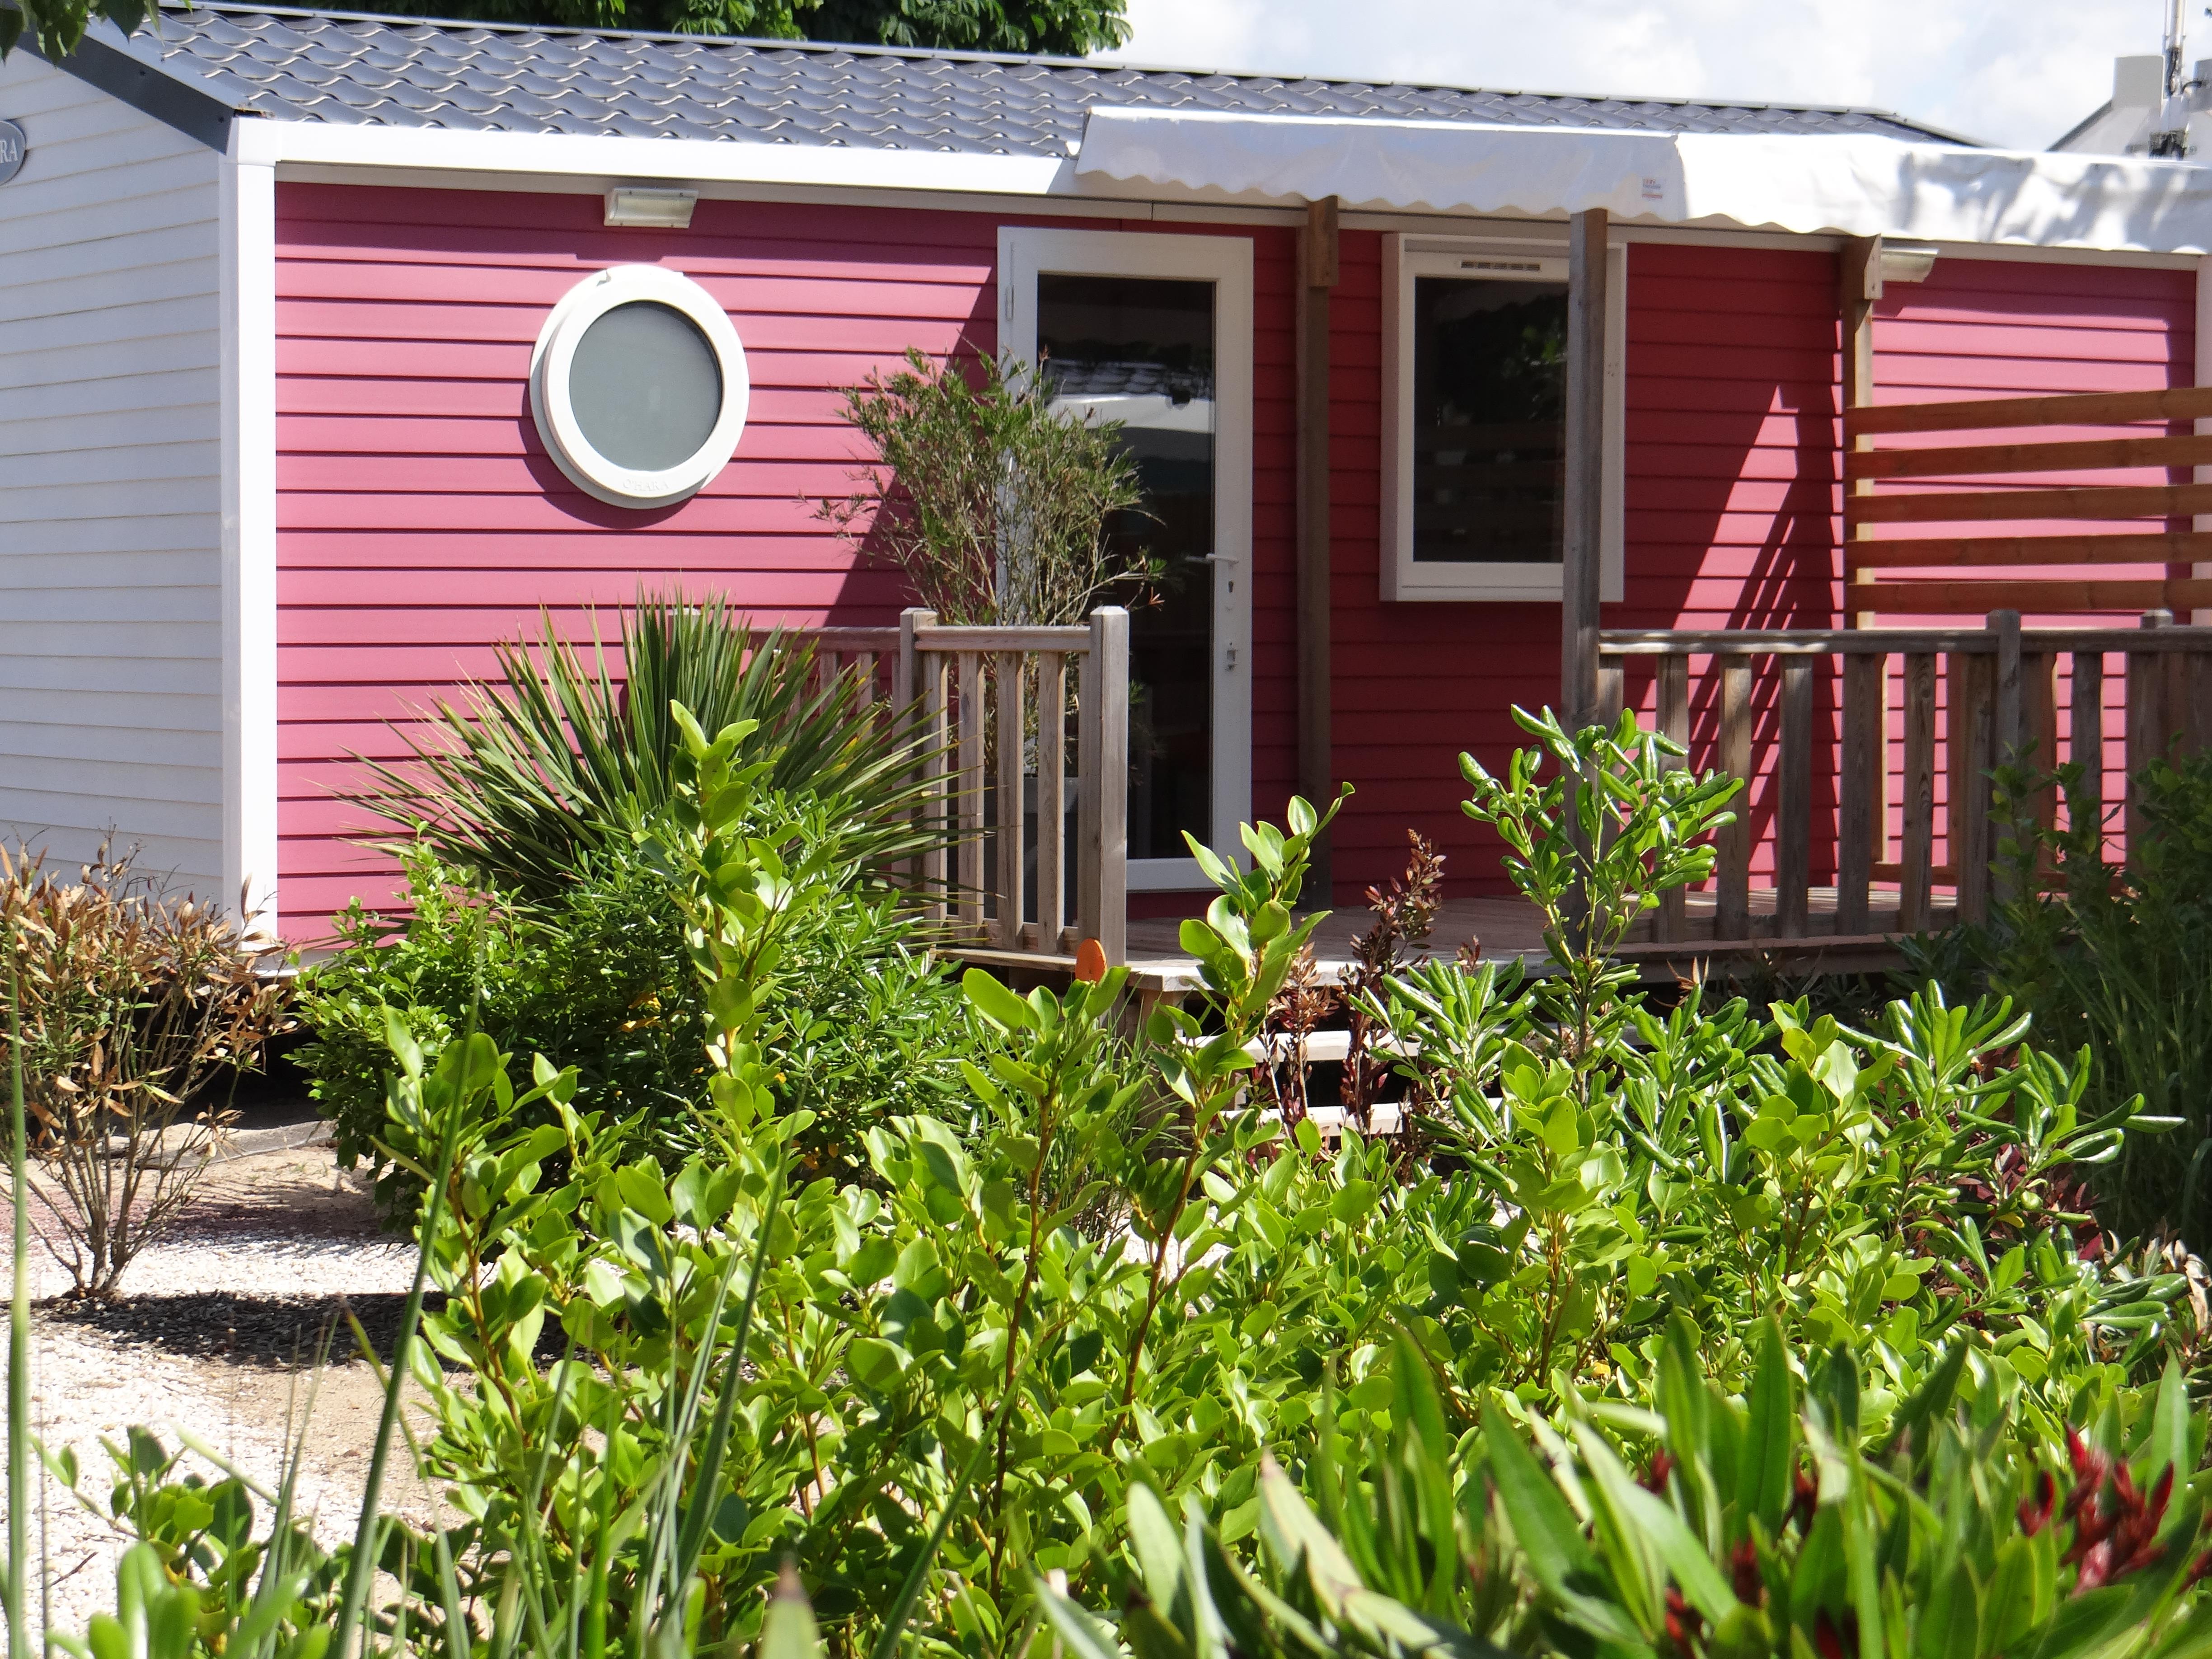 Cottage LITCHI - 26m² - terrasse bois semi-couverte - 2 chambres